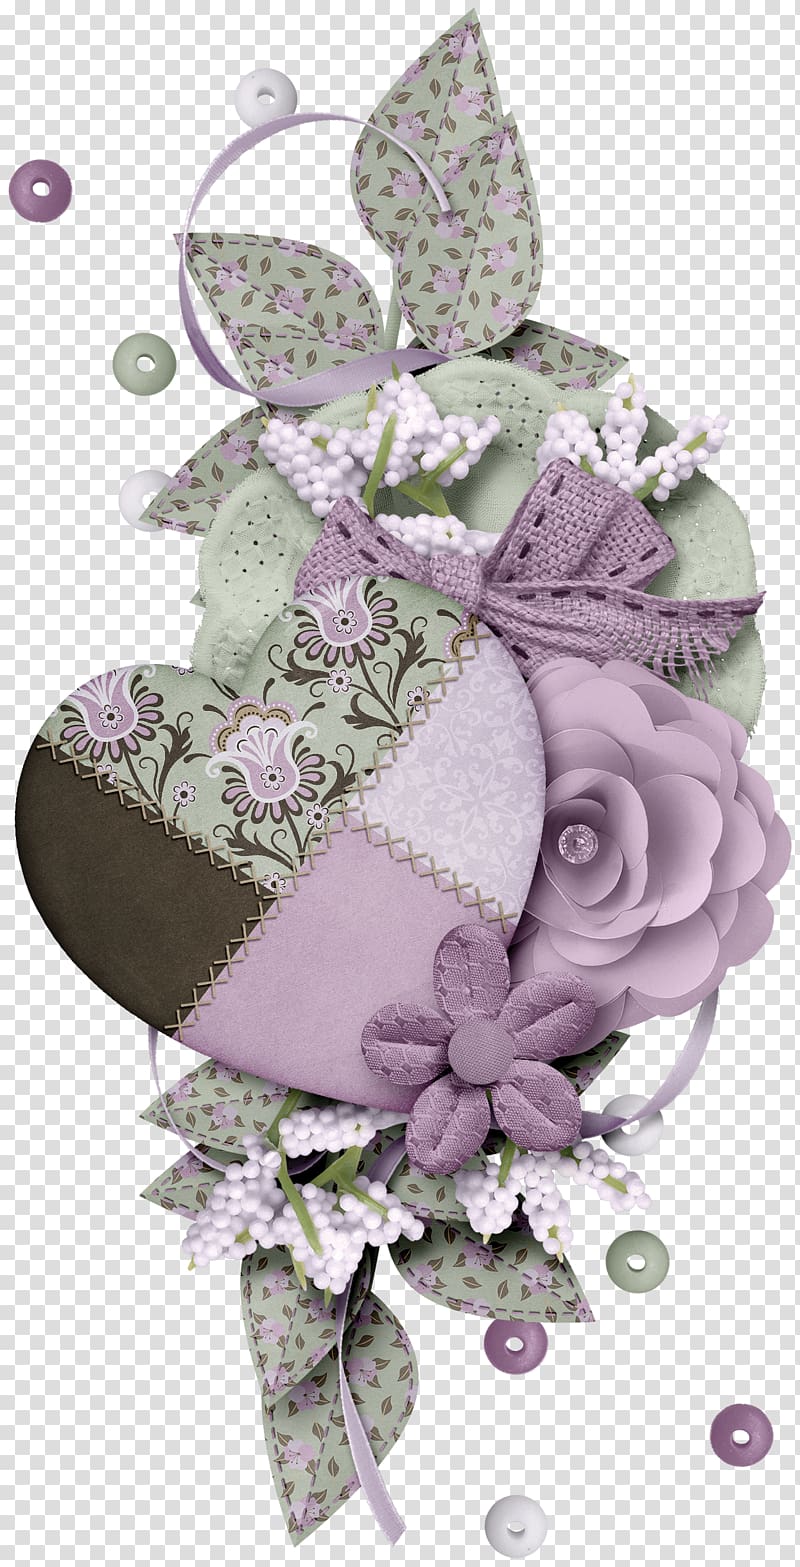 Digital scrapbooking Embellishment Cricut Collage, FLOWER FRAME transparent background PNG clipart